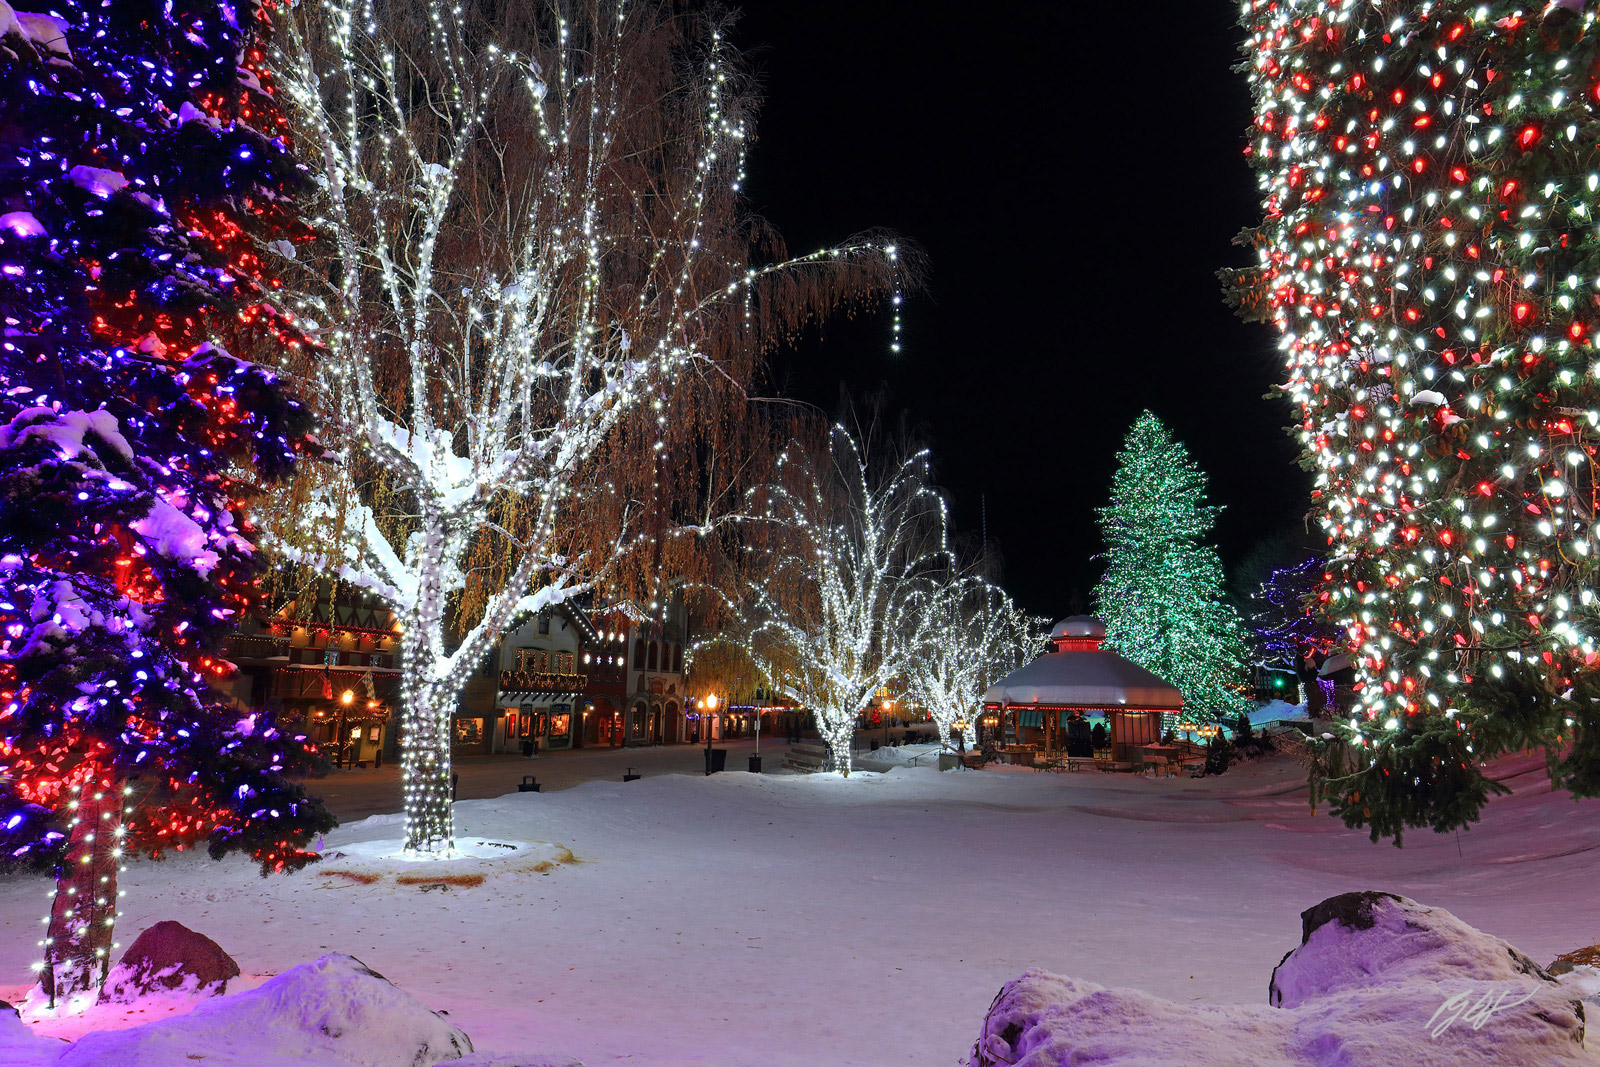 Holiday Lights on Display in Bavarian Village of Leavenworth Washington